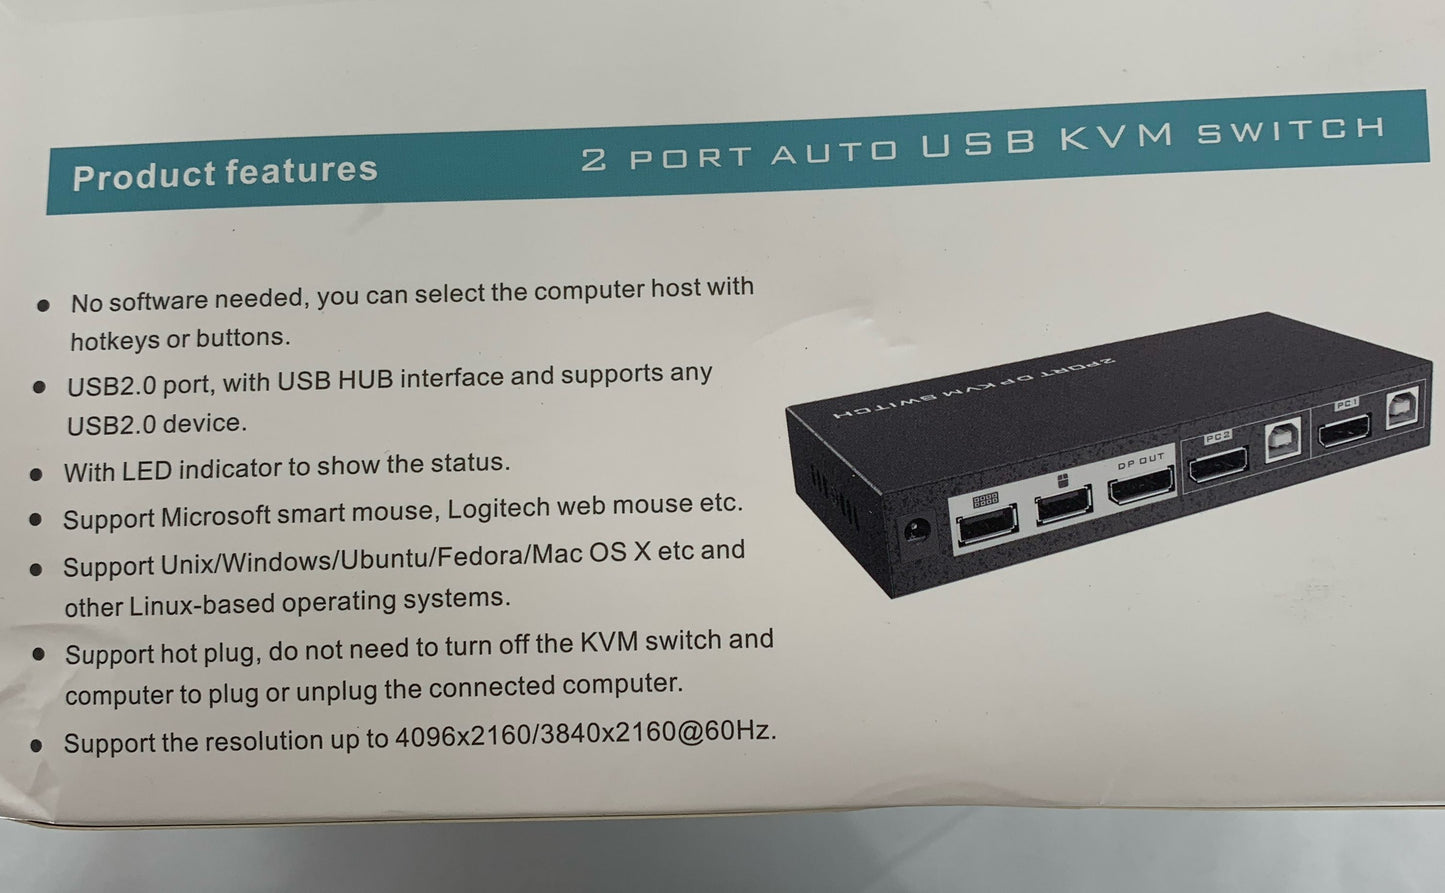 DP KVM Switch 2 Port Auto USB MT-VIKI 4K 60Hz Automatic Switching, Hot-Key PK201